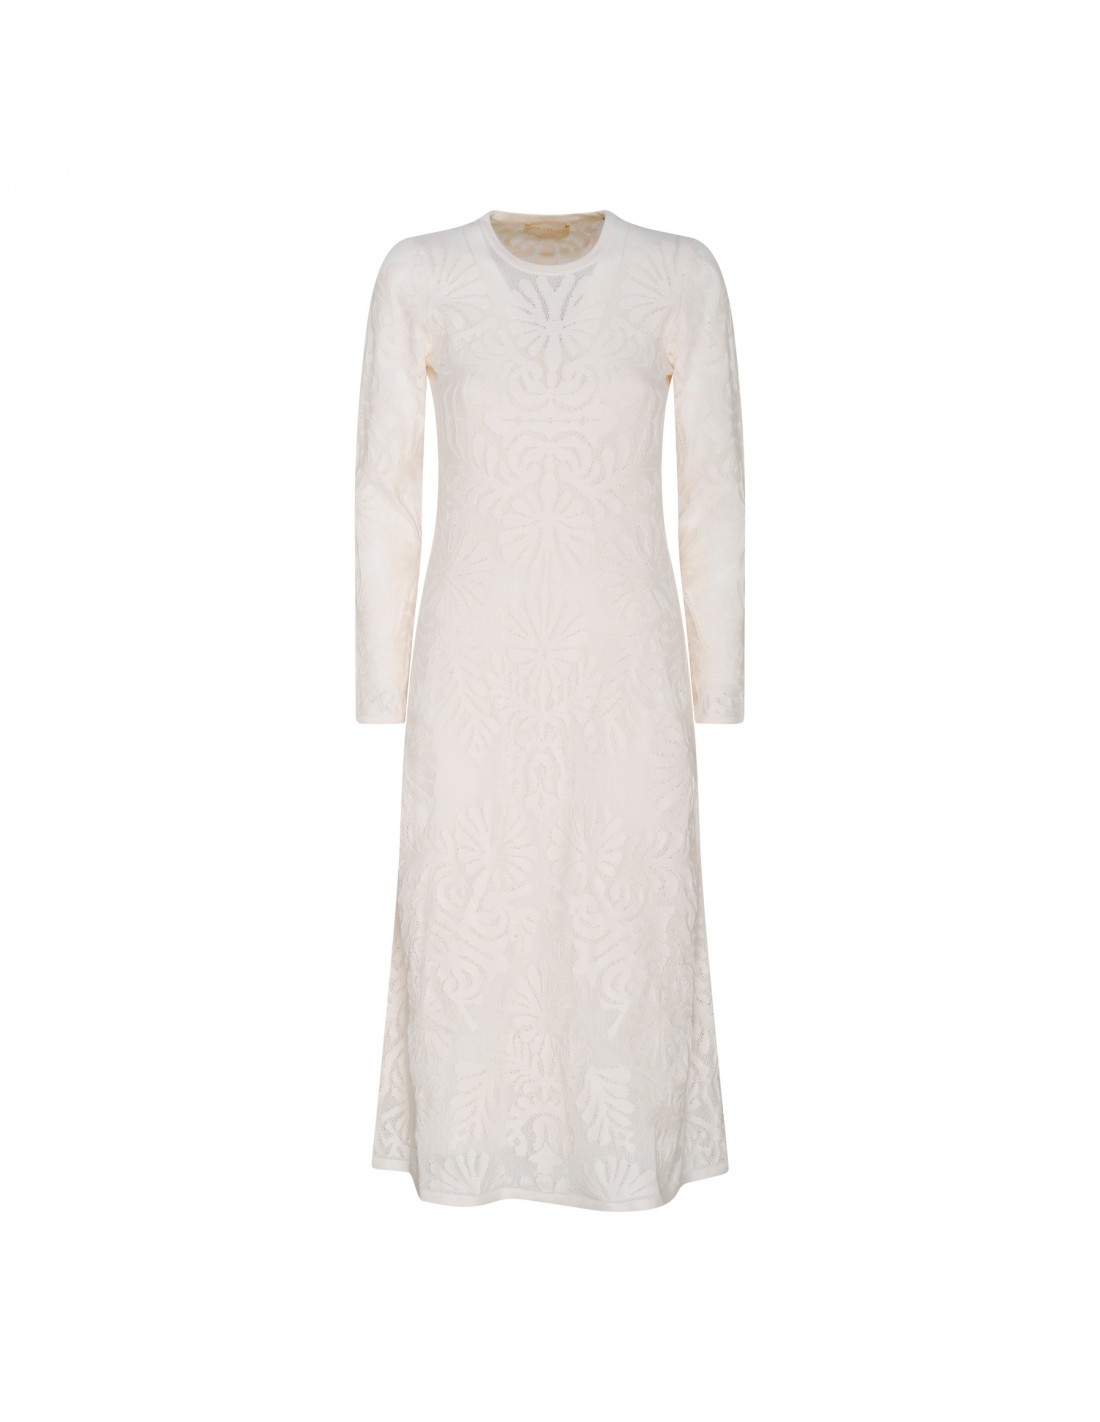 Angelica white dress